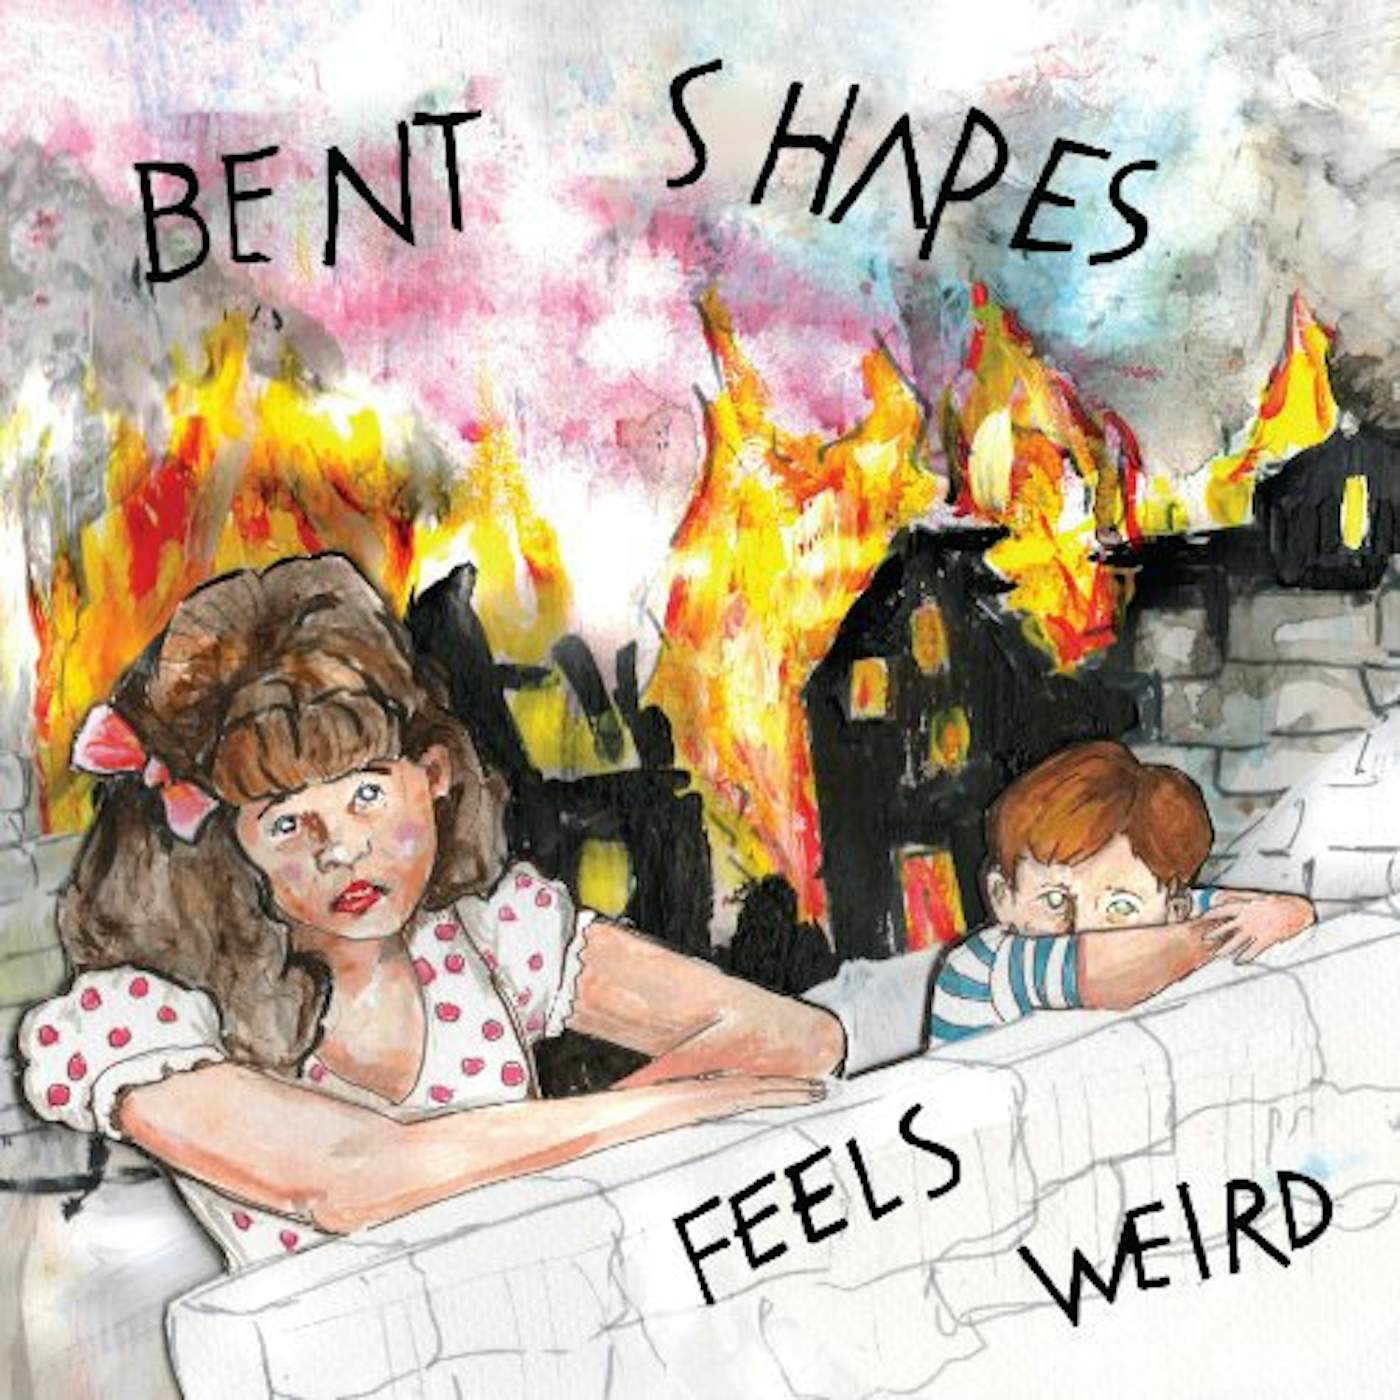 Bent Shapes Feels Weird Vinyl Record